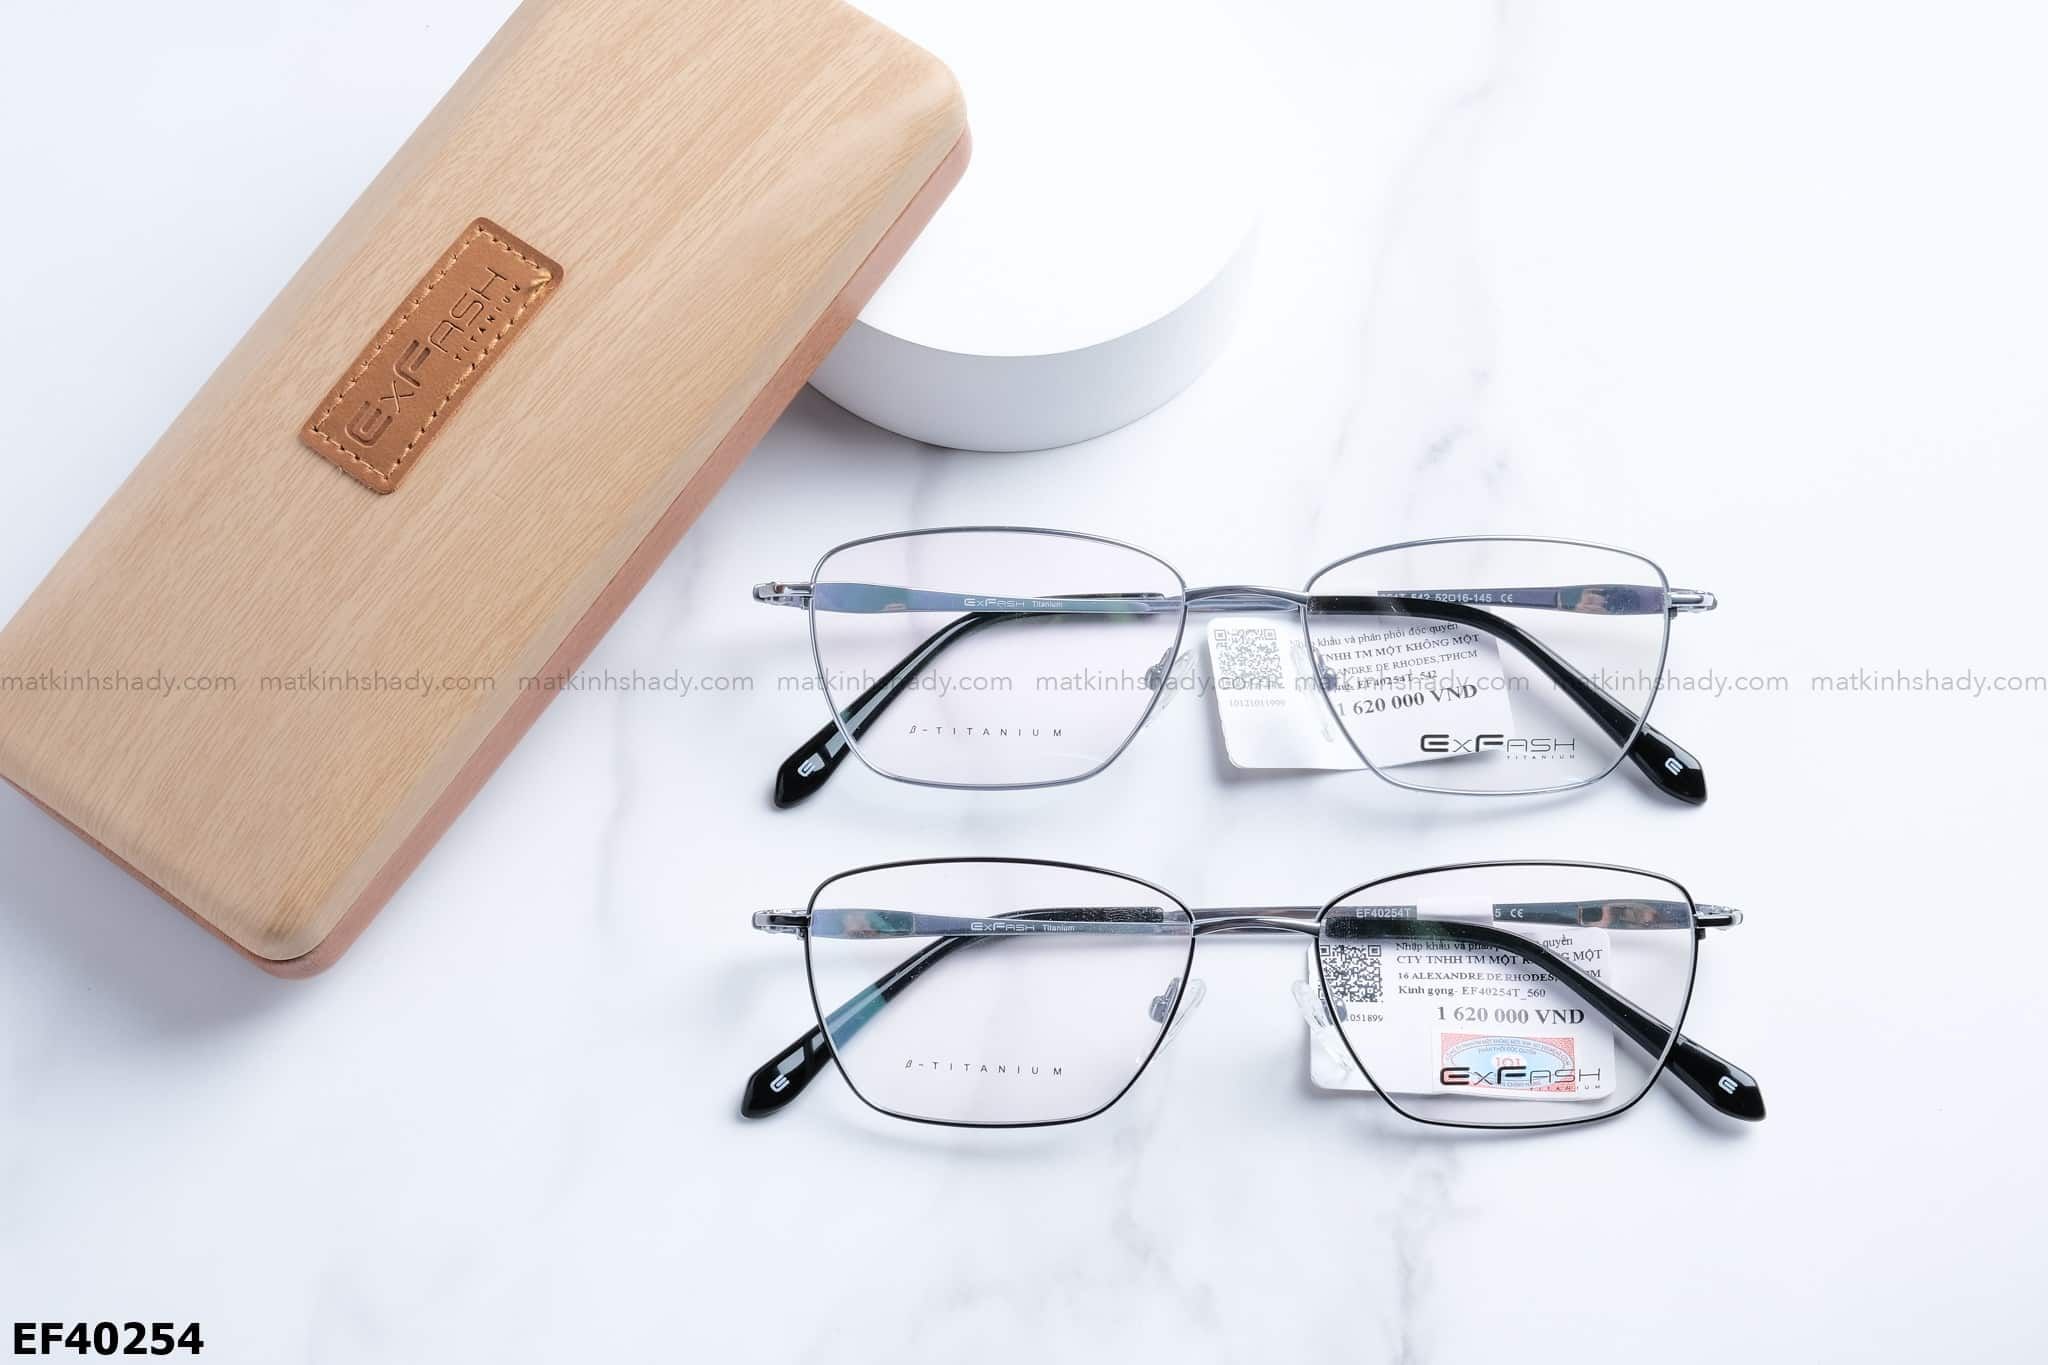  Exfash Eyewear - Glasses - EF40254 